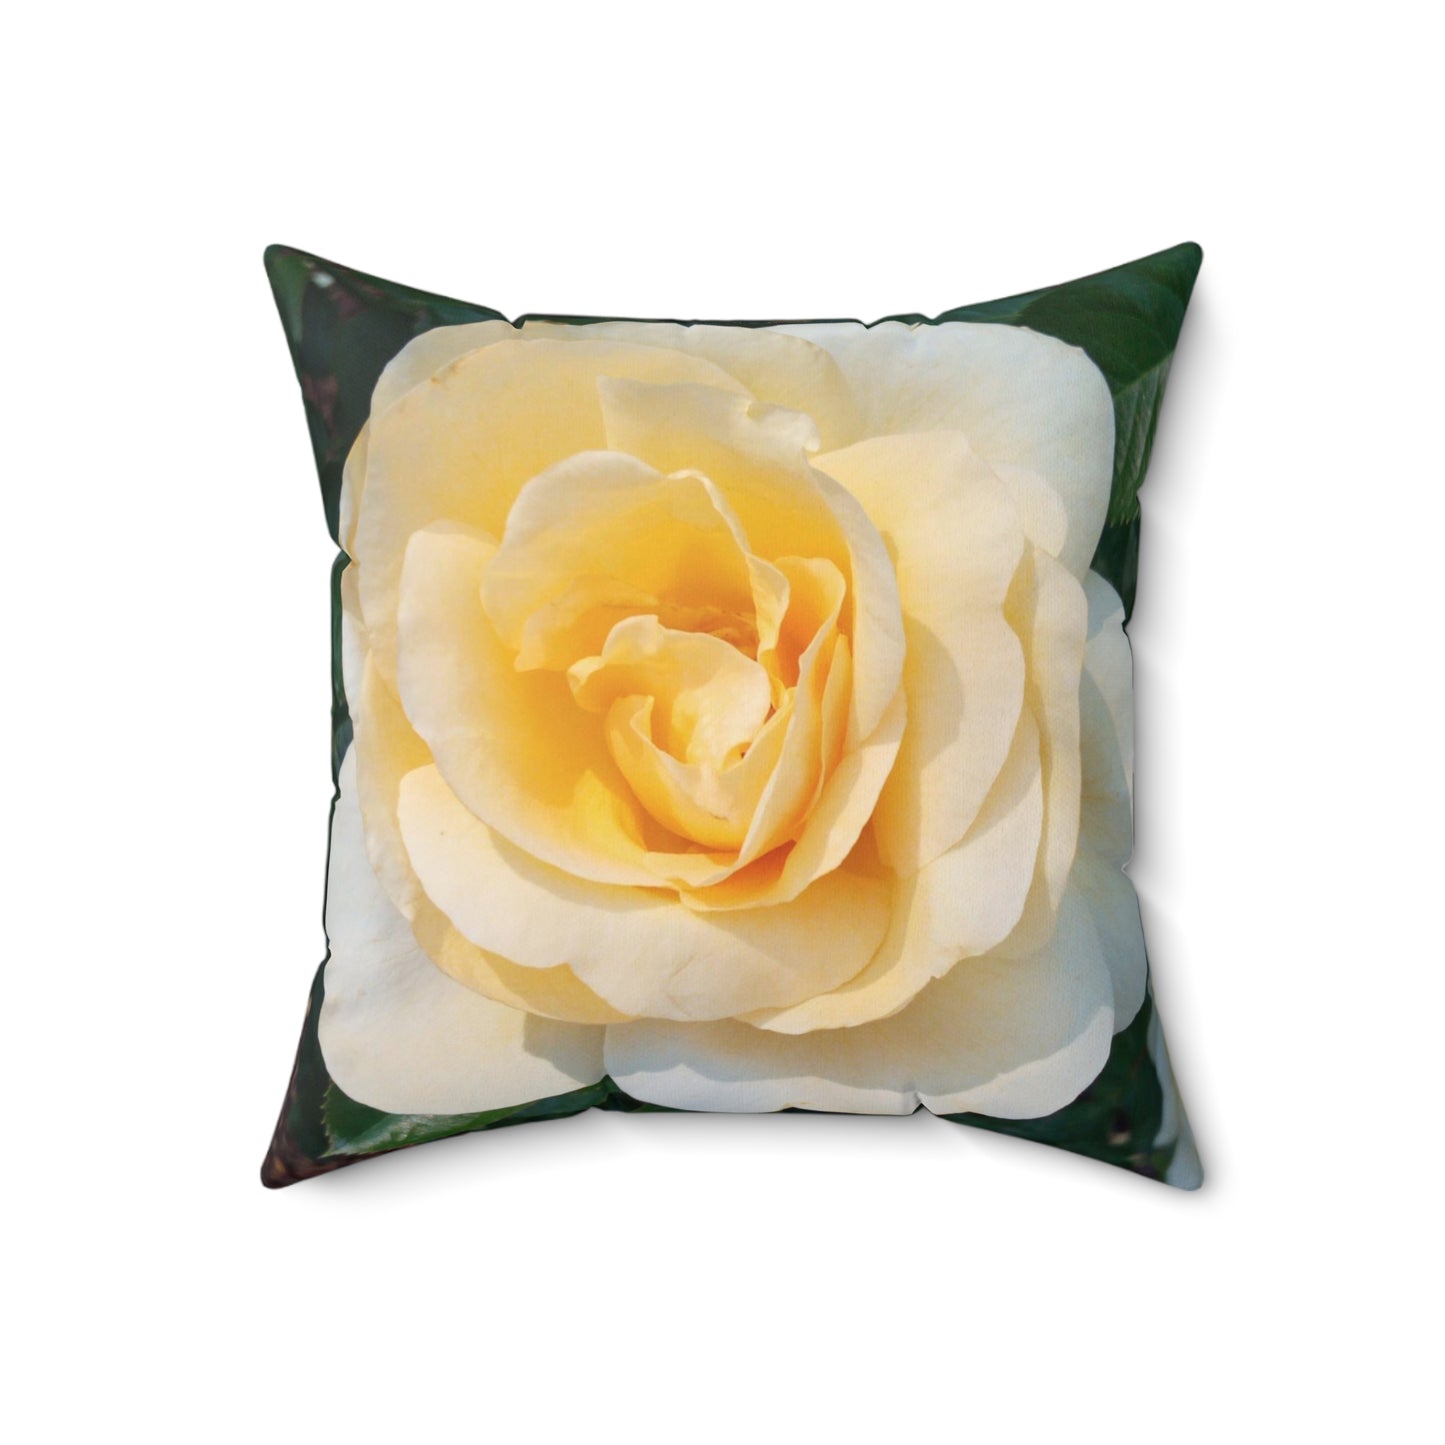 Cream Rose Spun Polyester Square Pillow